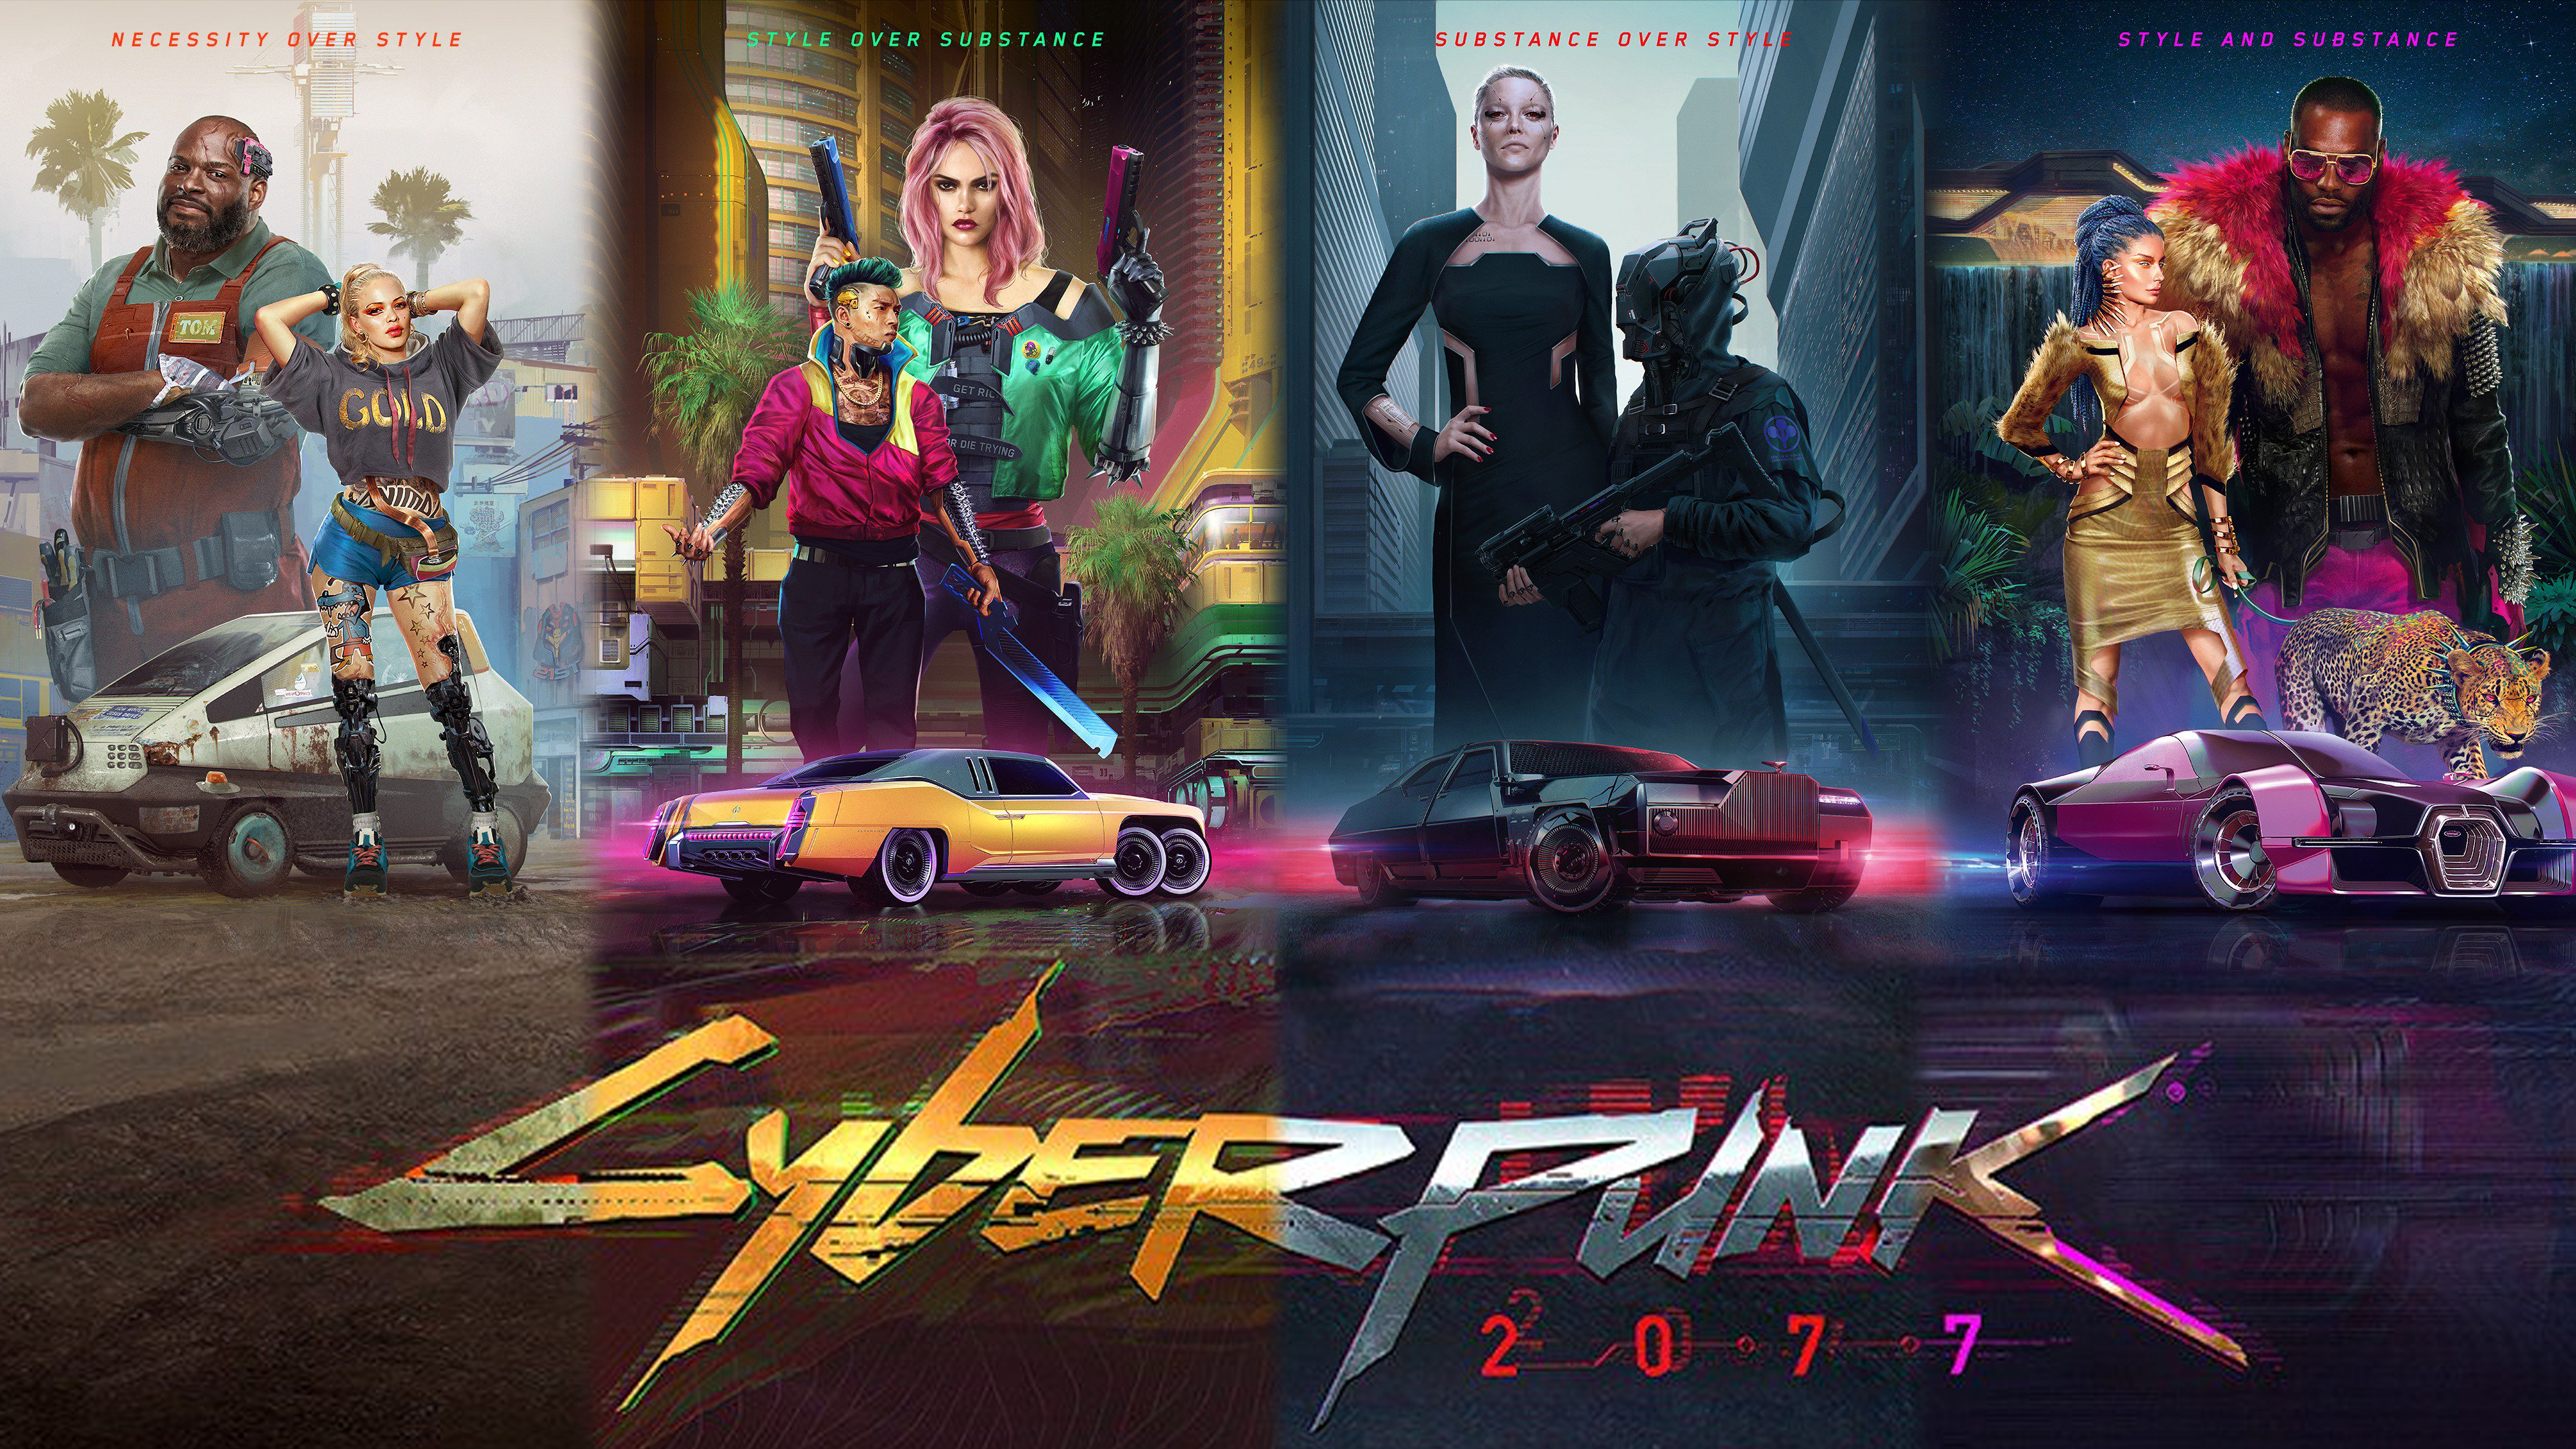 Cyberpunk 2020 Wallpapers